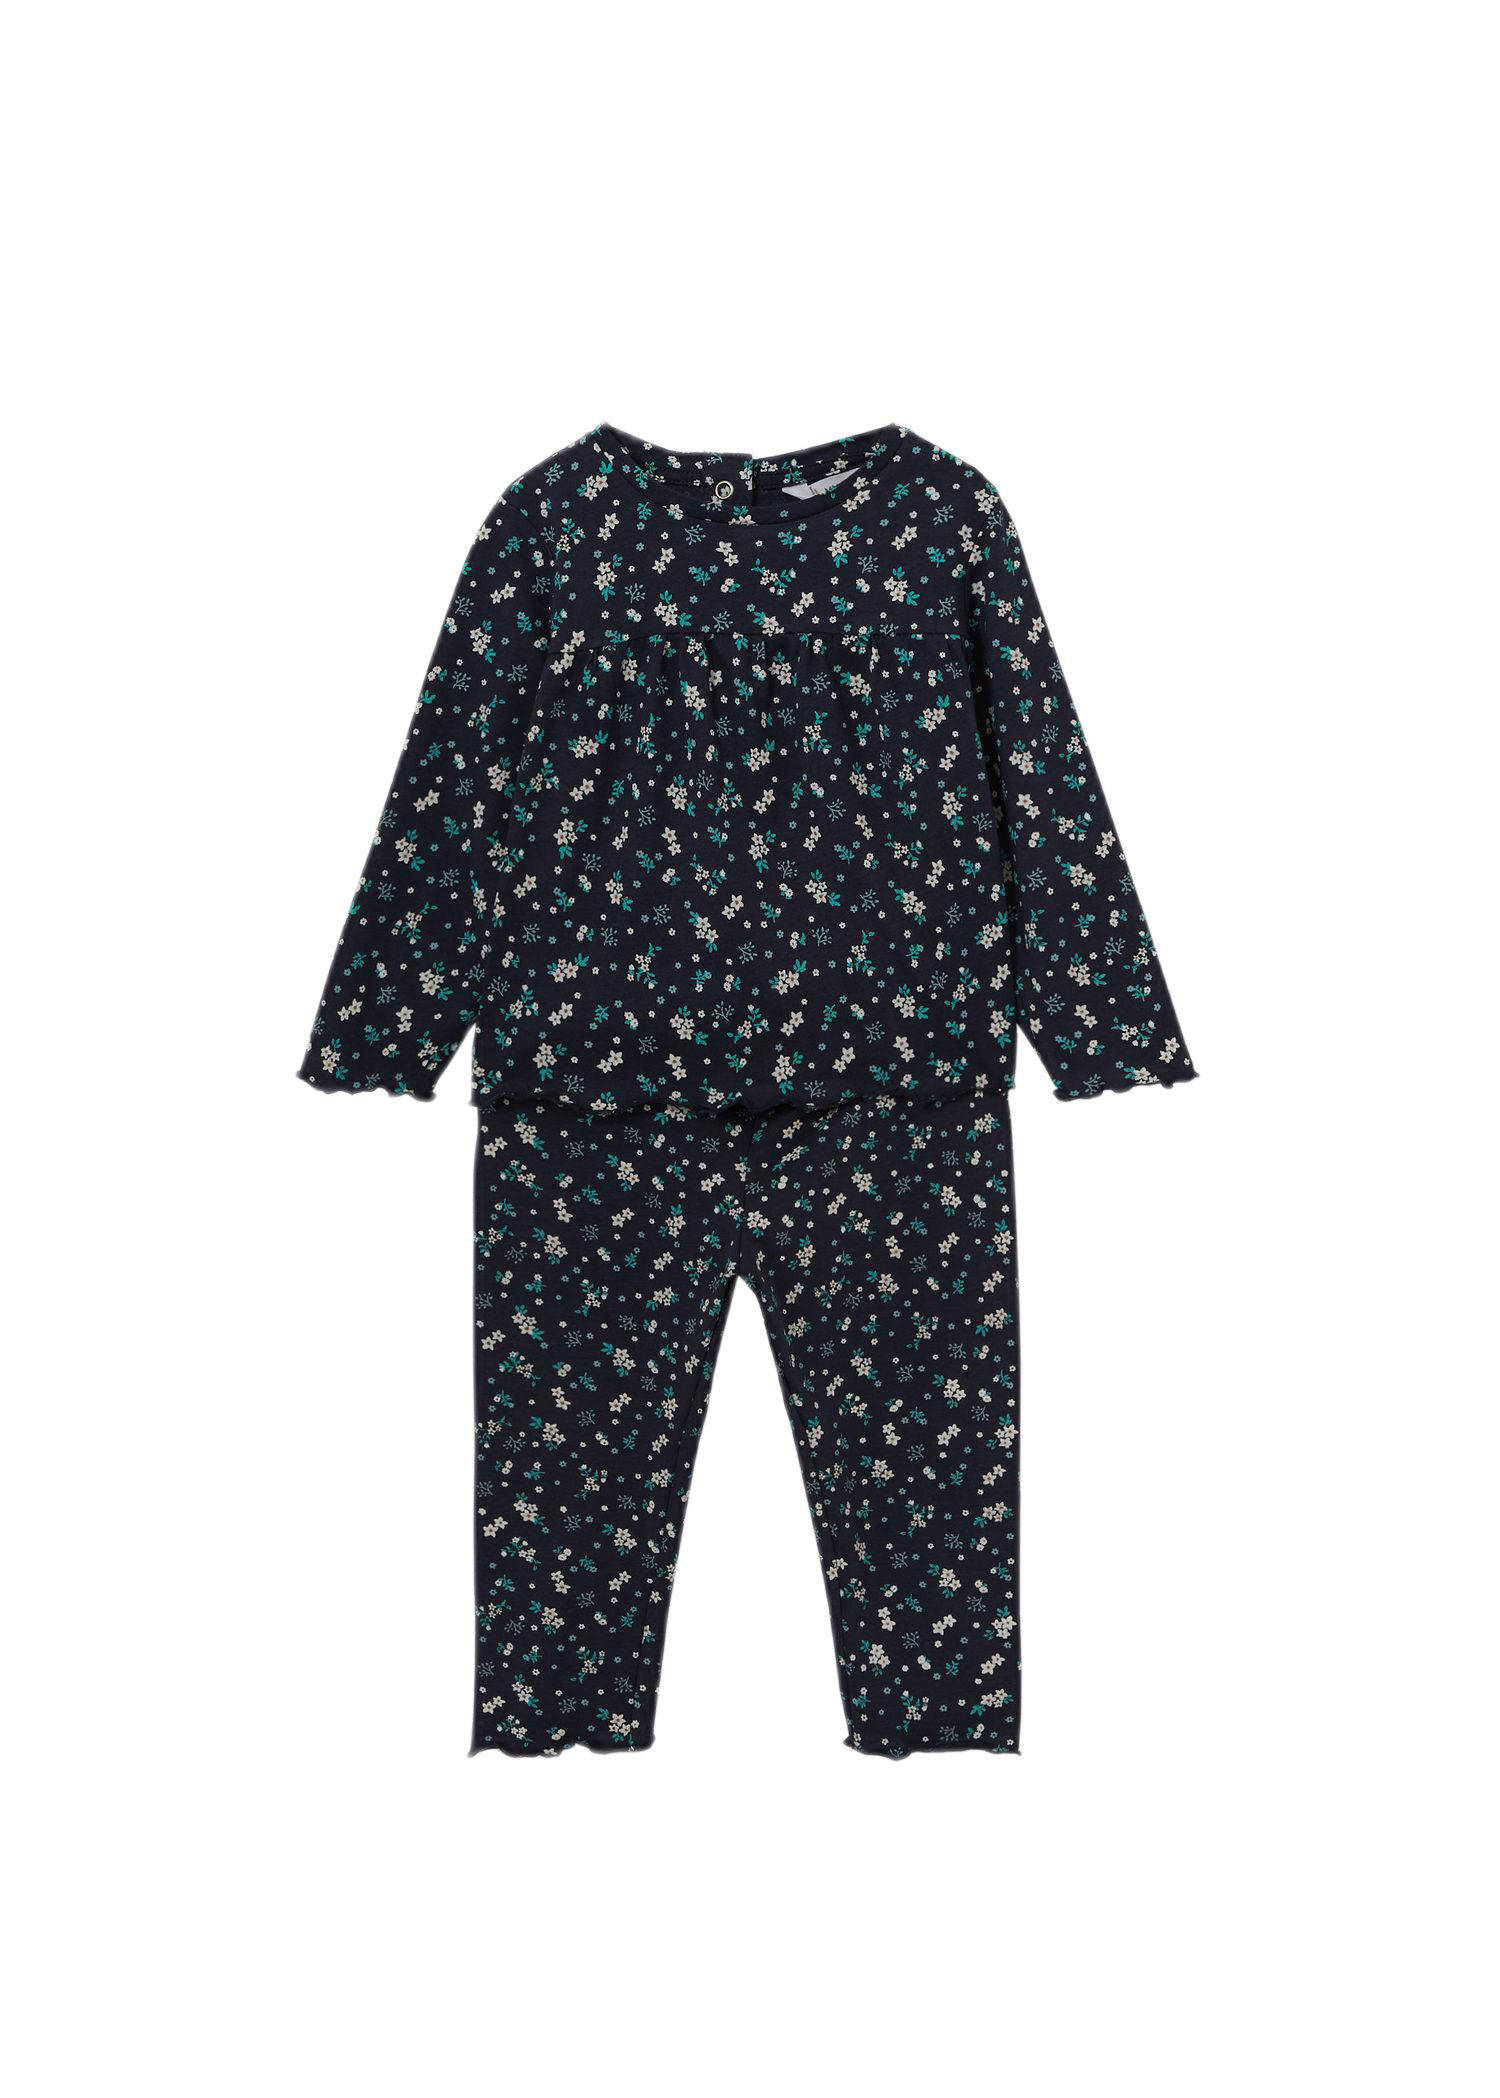 Kleding Meisjeskleding Pyjamas & Badjassen Pyjama Sets Sterrenprint kinder pyjama's 